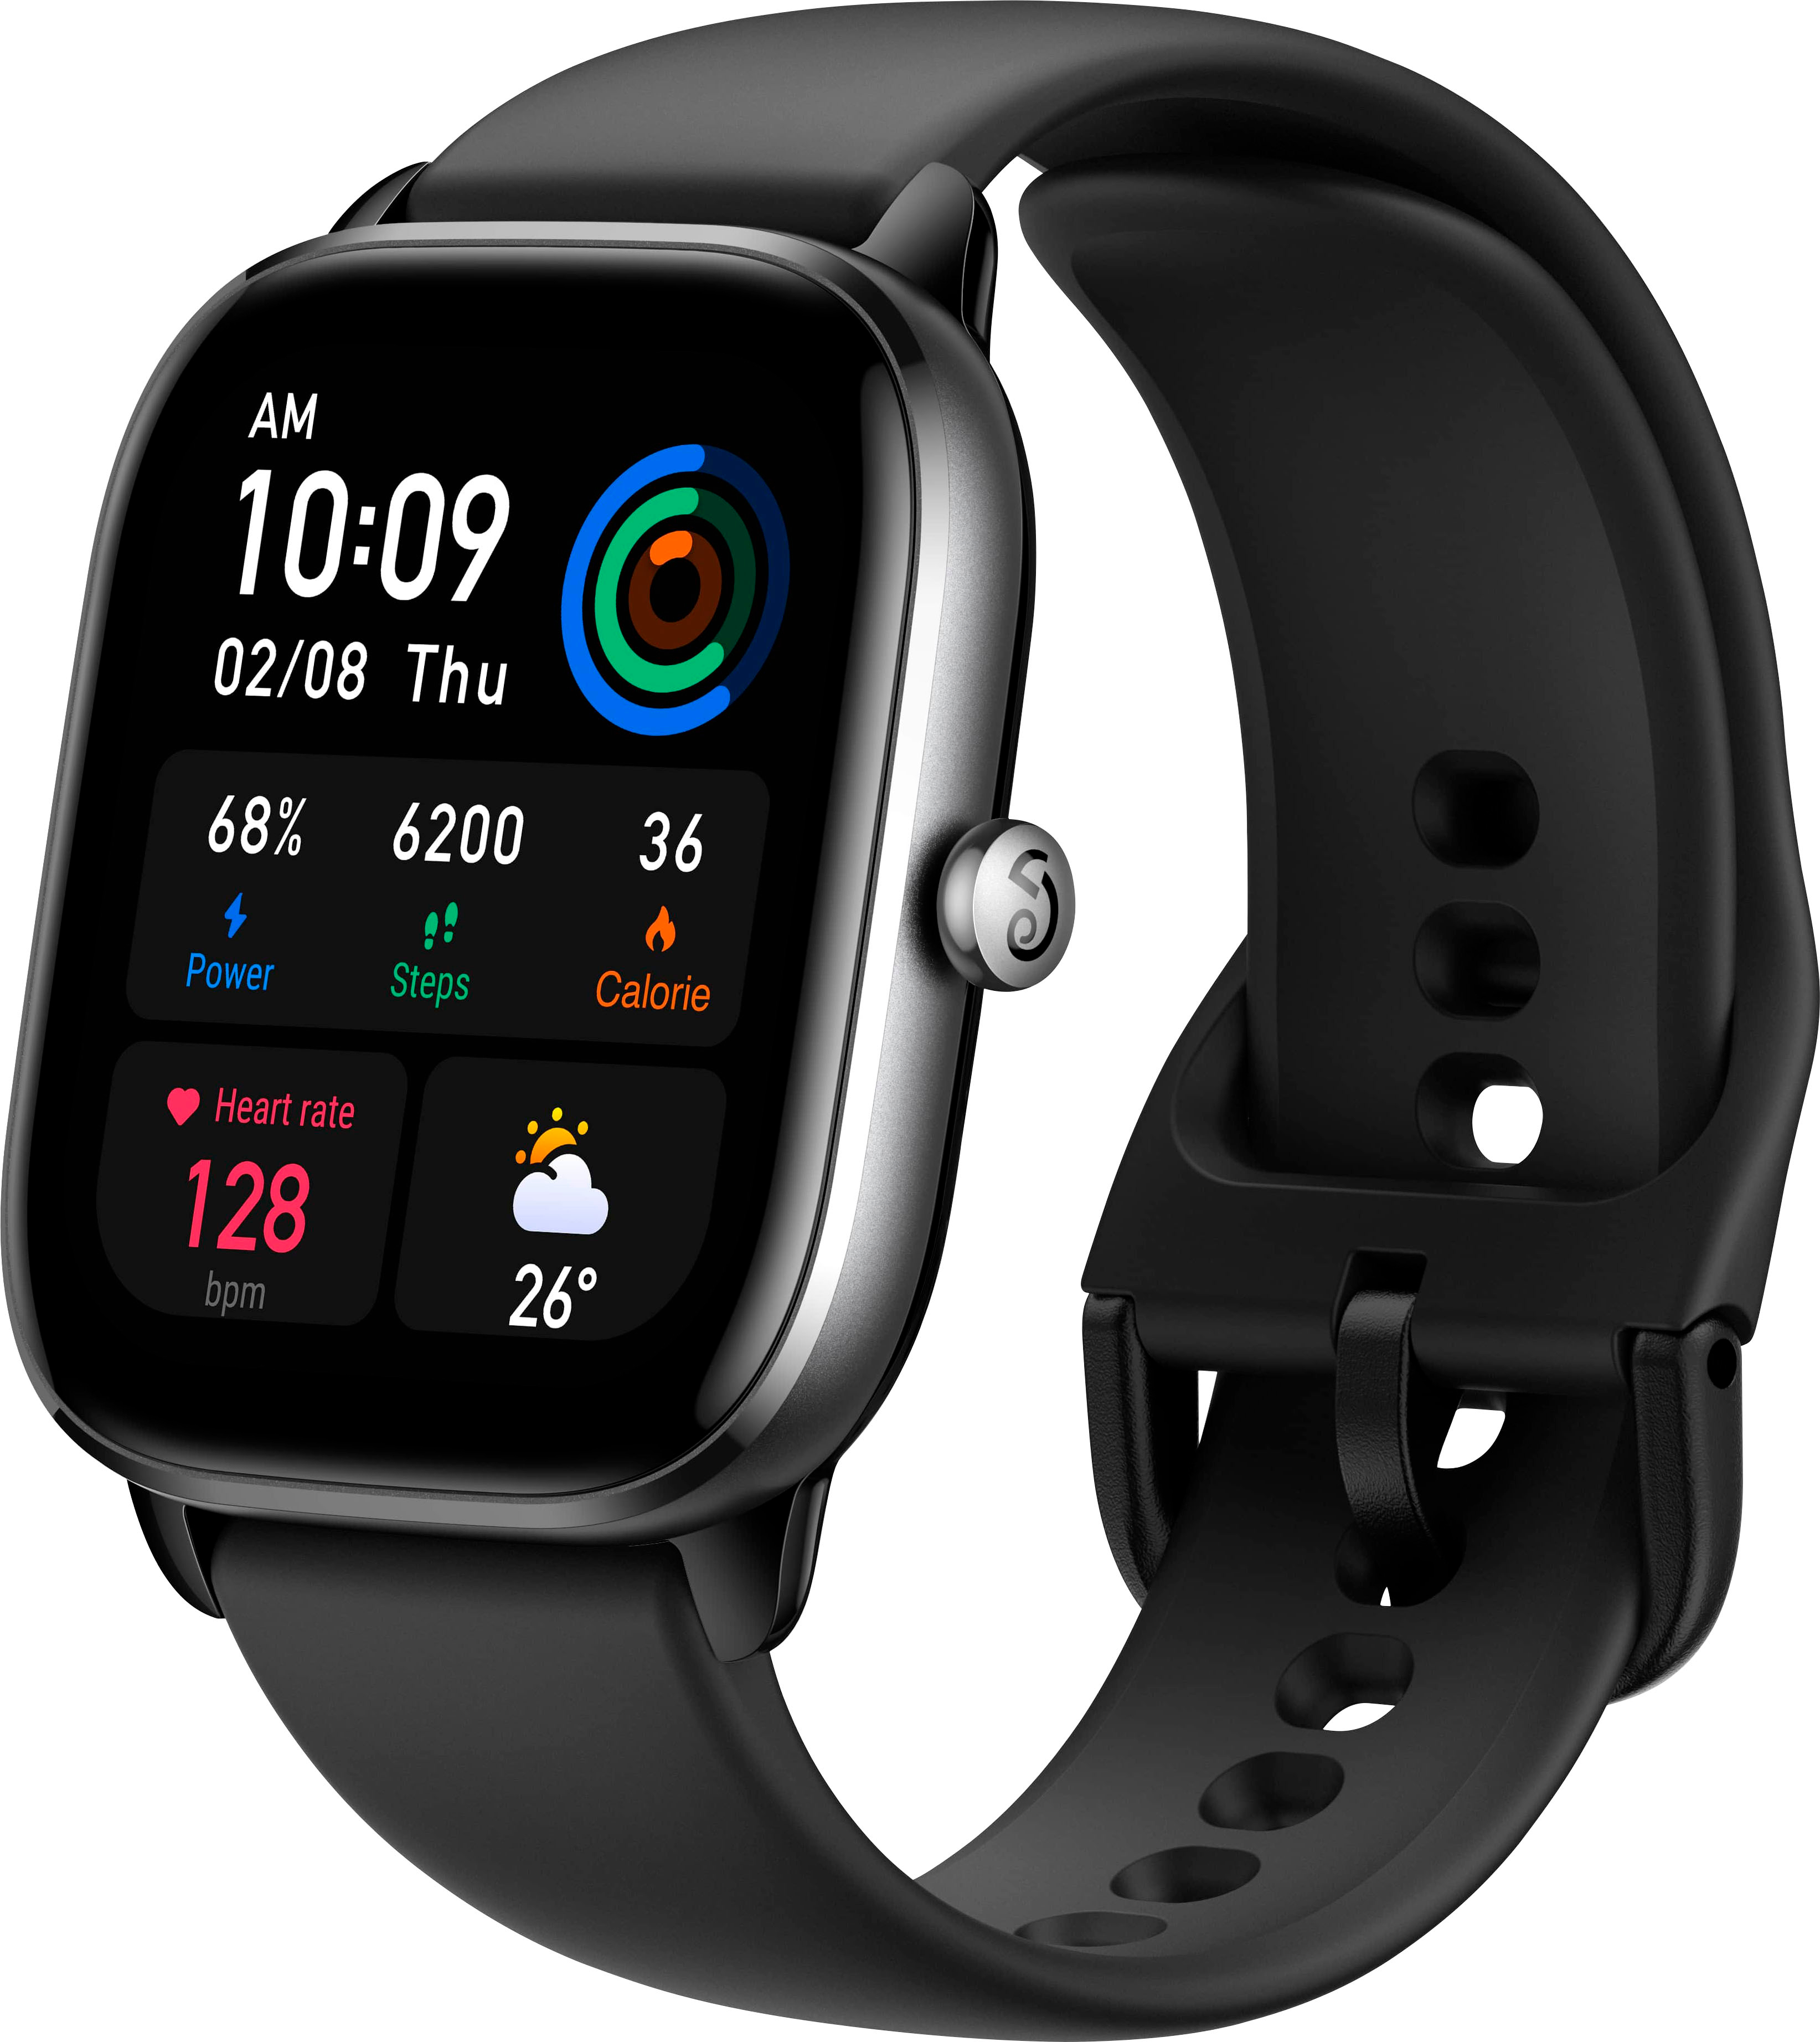 Amazfit GTR Mini Smartwatch Review: Fun & Functional - Smartprix